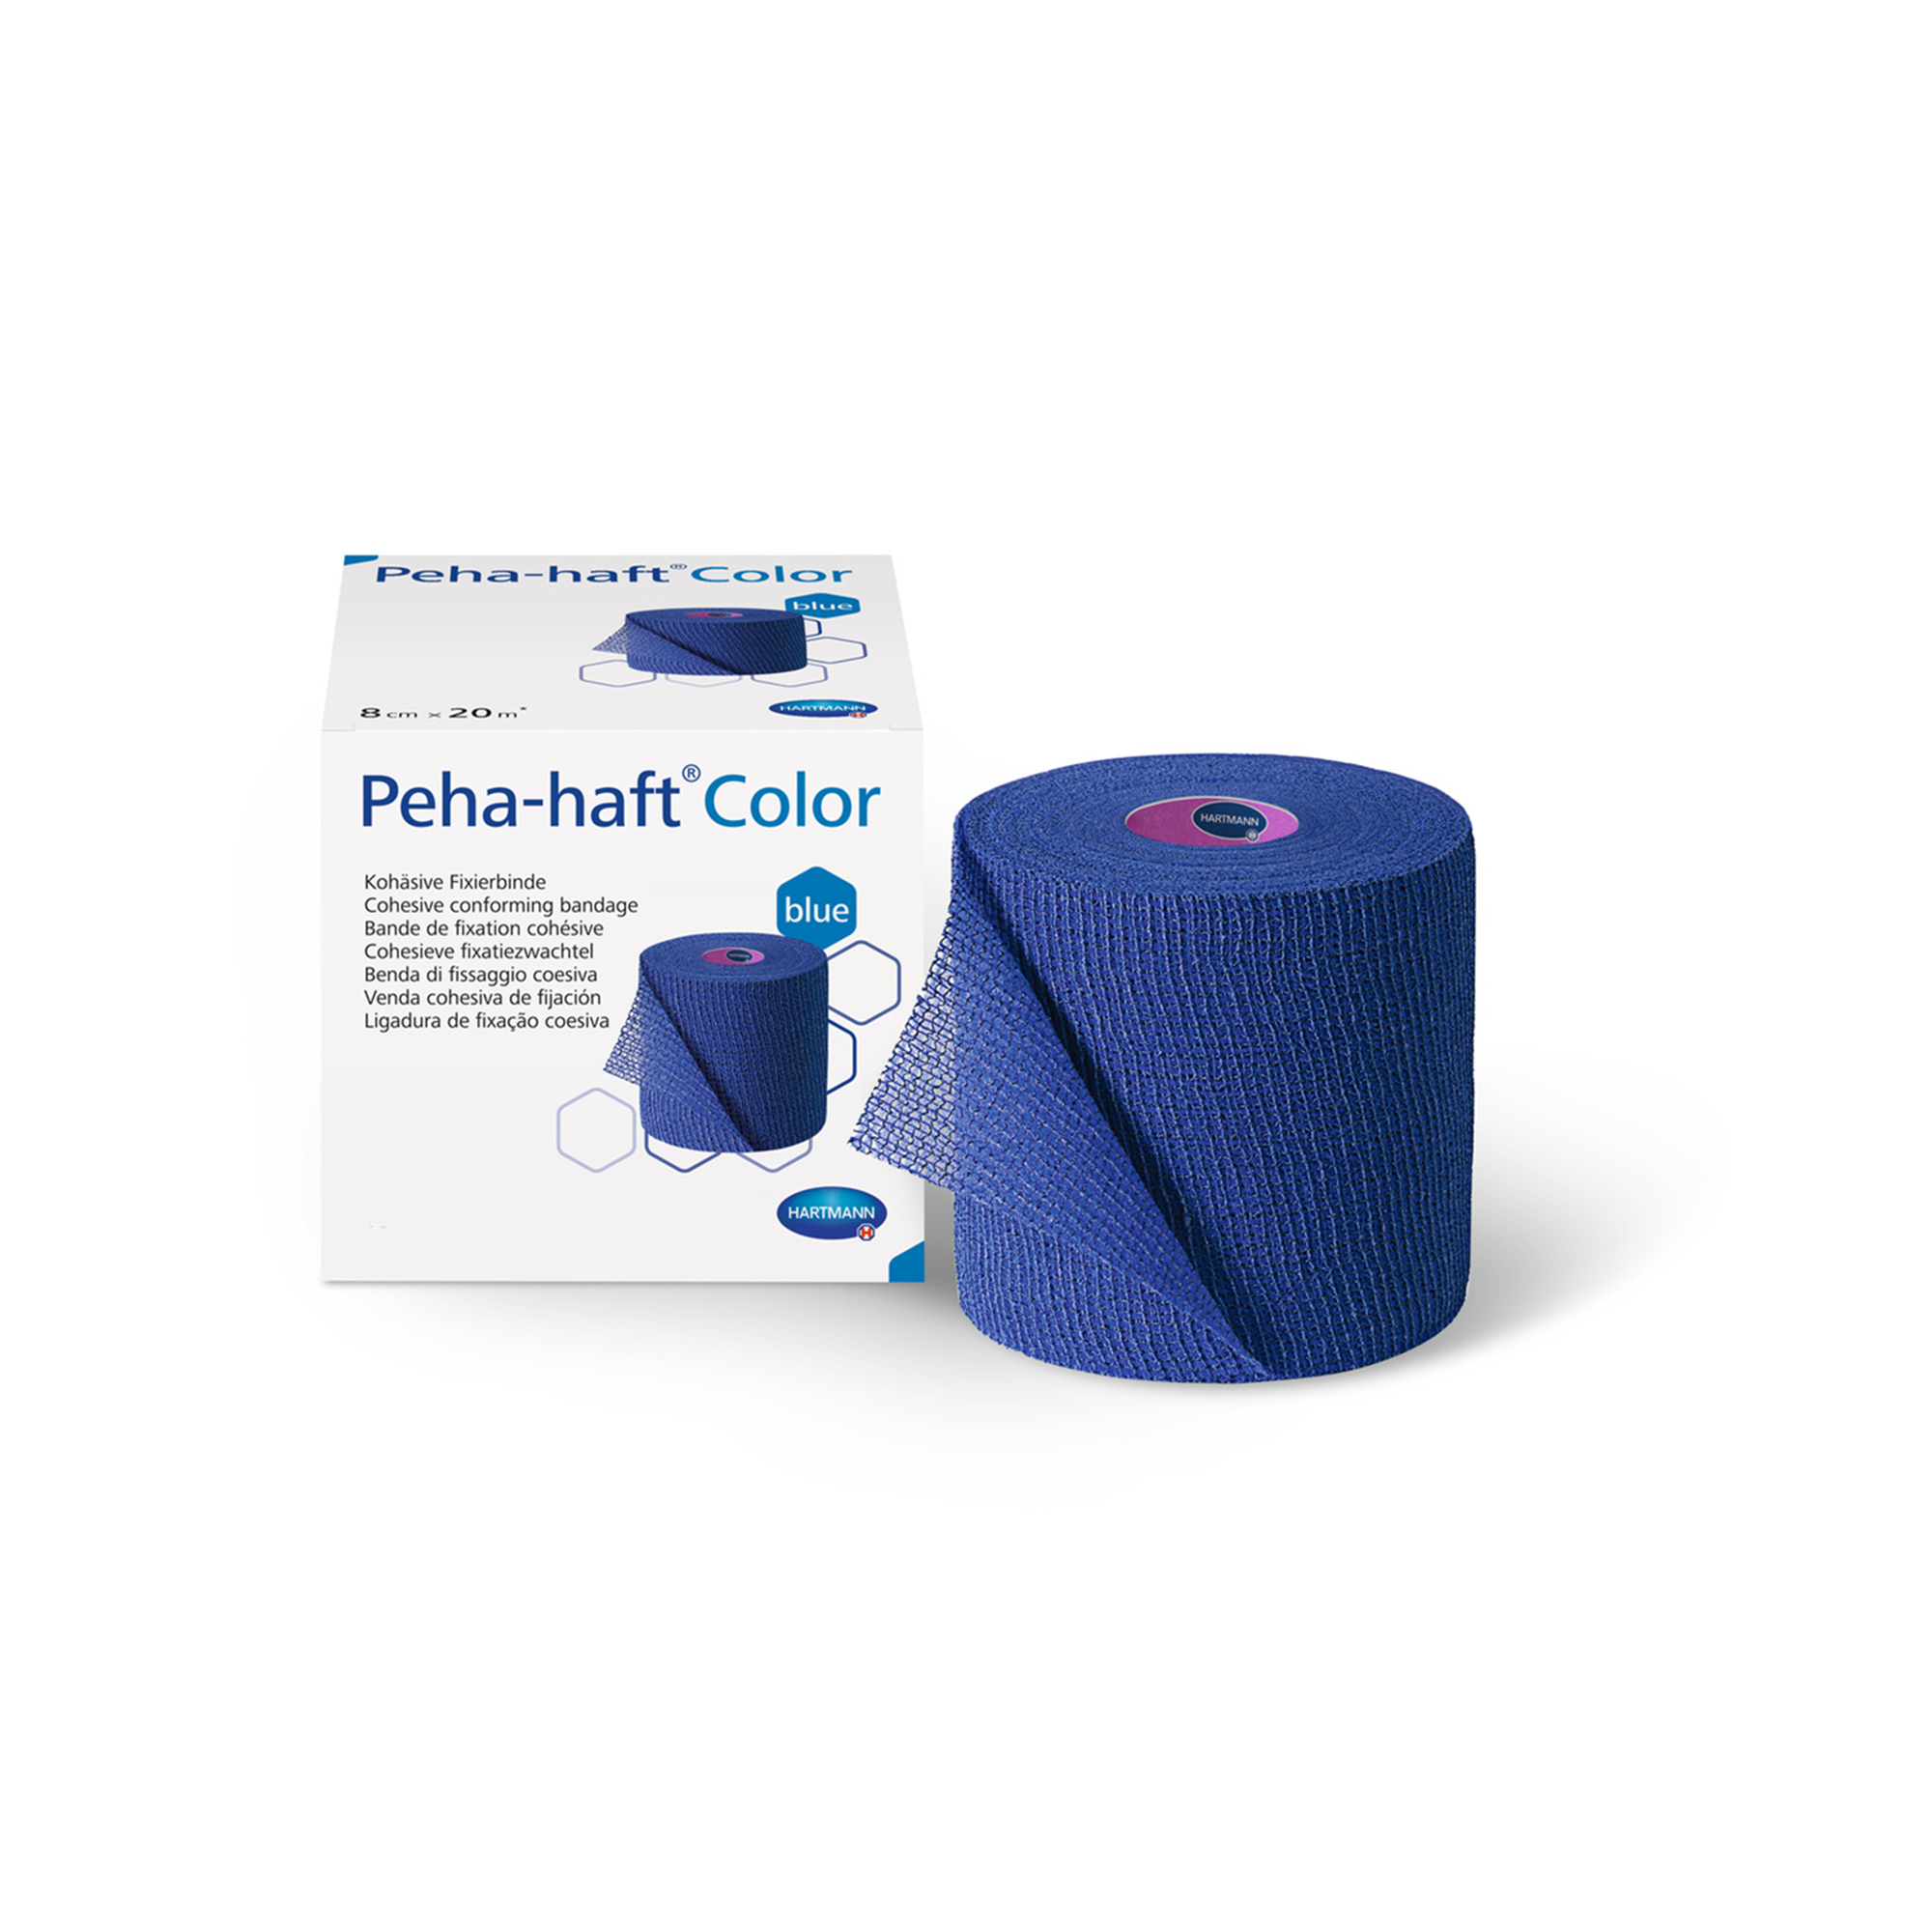 Hartmann Peha-haft® Color 6 cm blue, stretched 21 m long